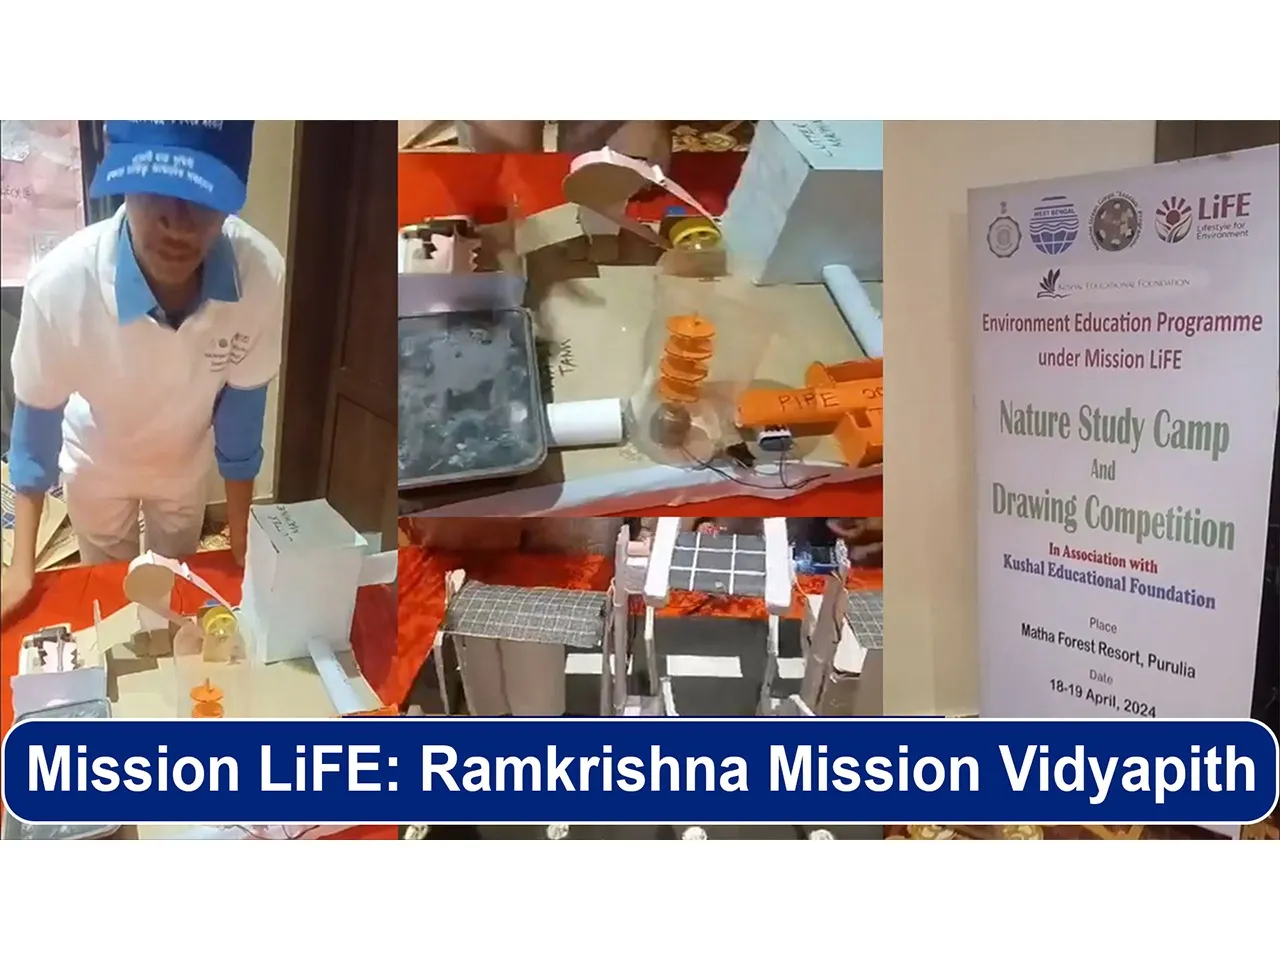 Ramkrishna Mission Vidyapith